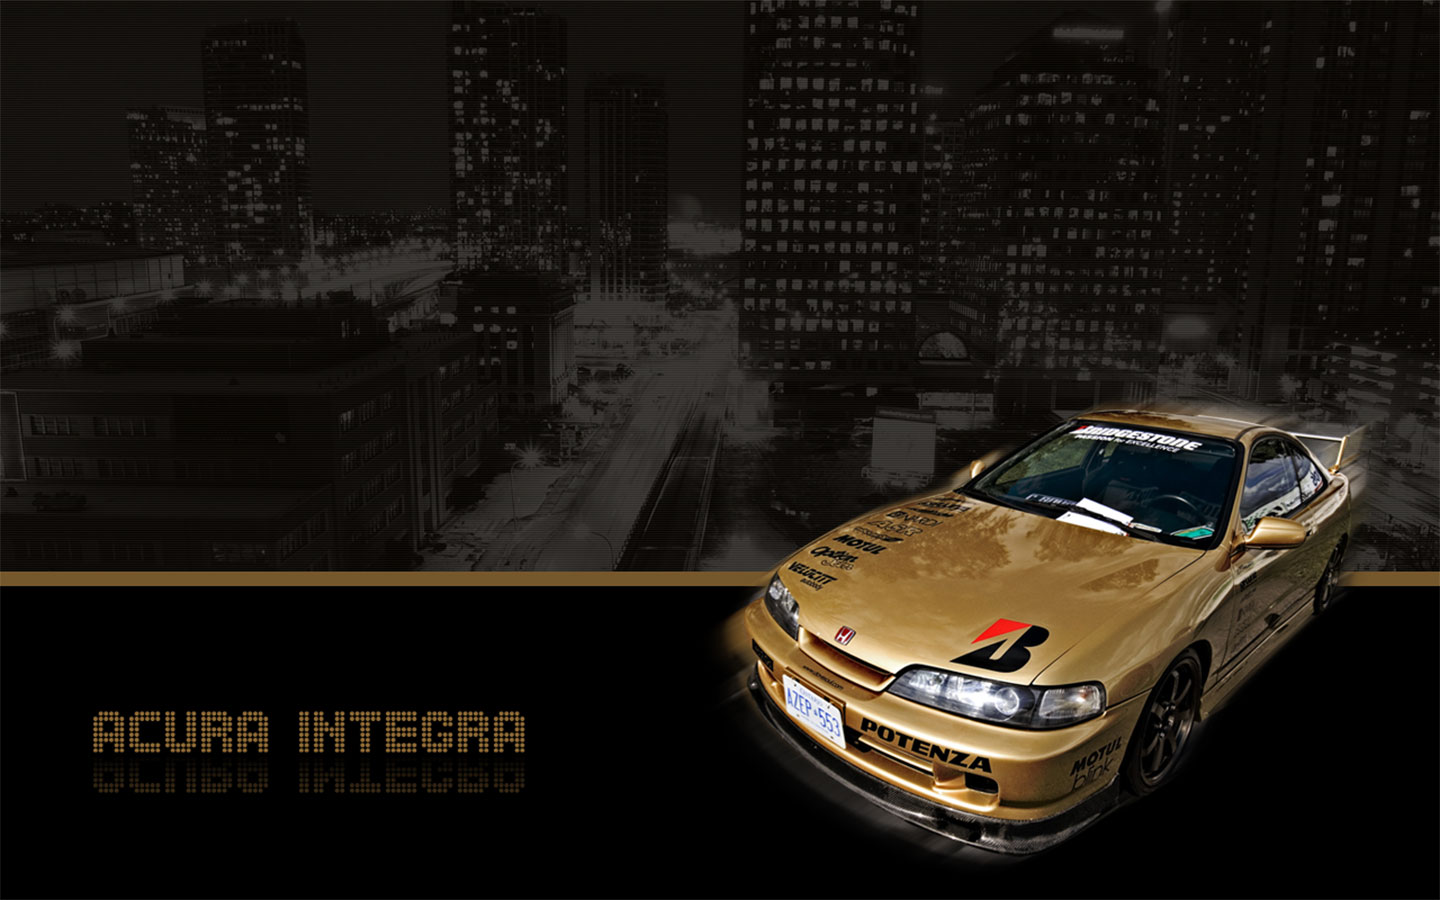 Honda Integra Wallpaper HD In Cars Imageci